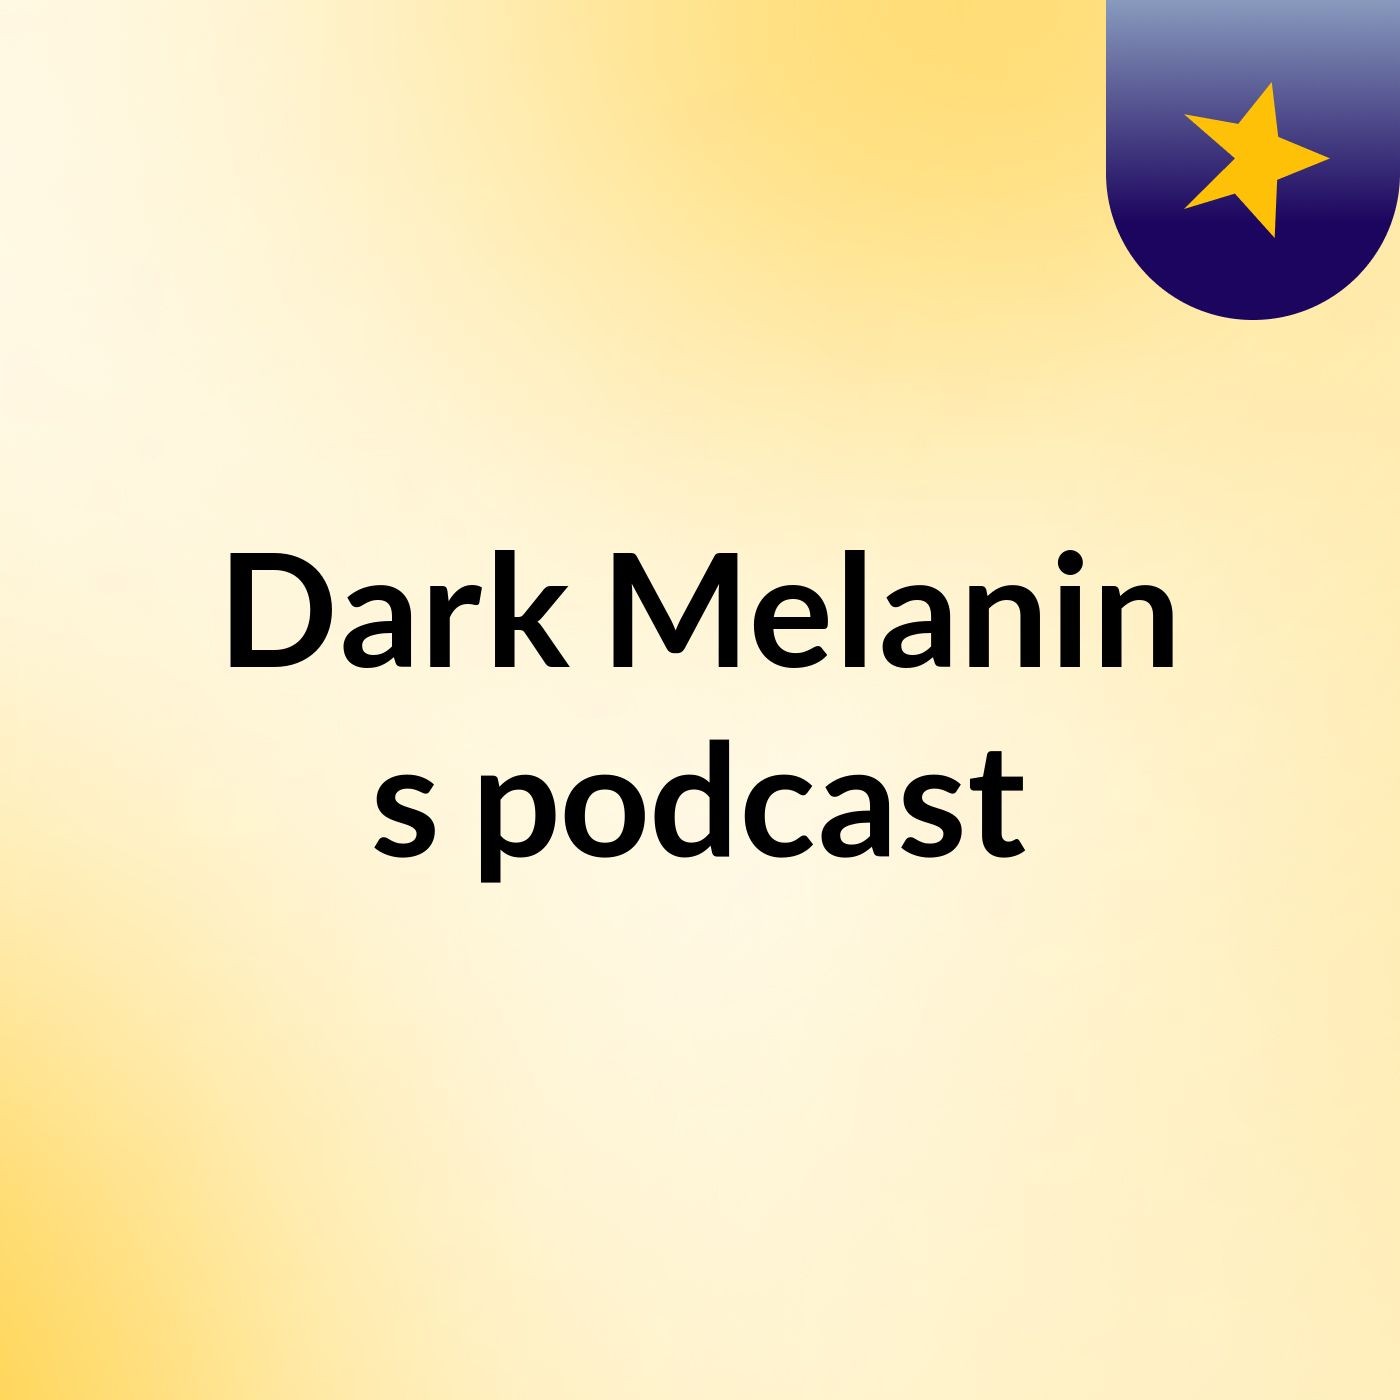 Dark Melanin's podcast